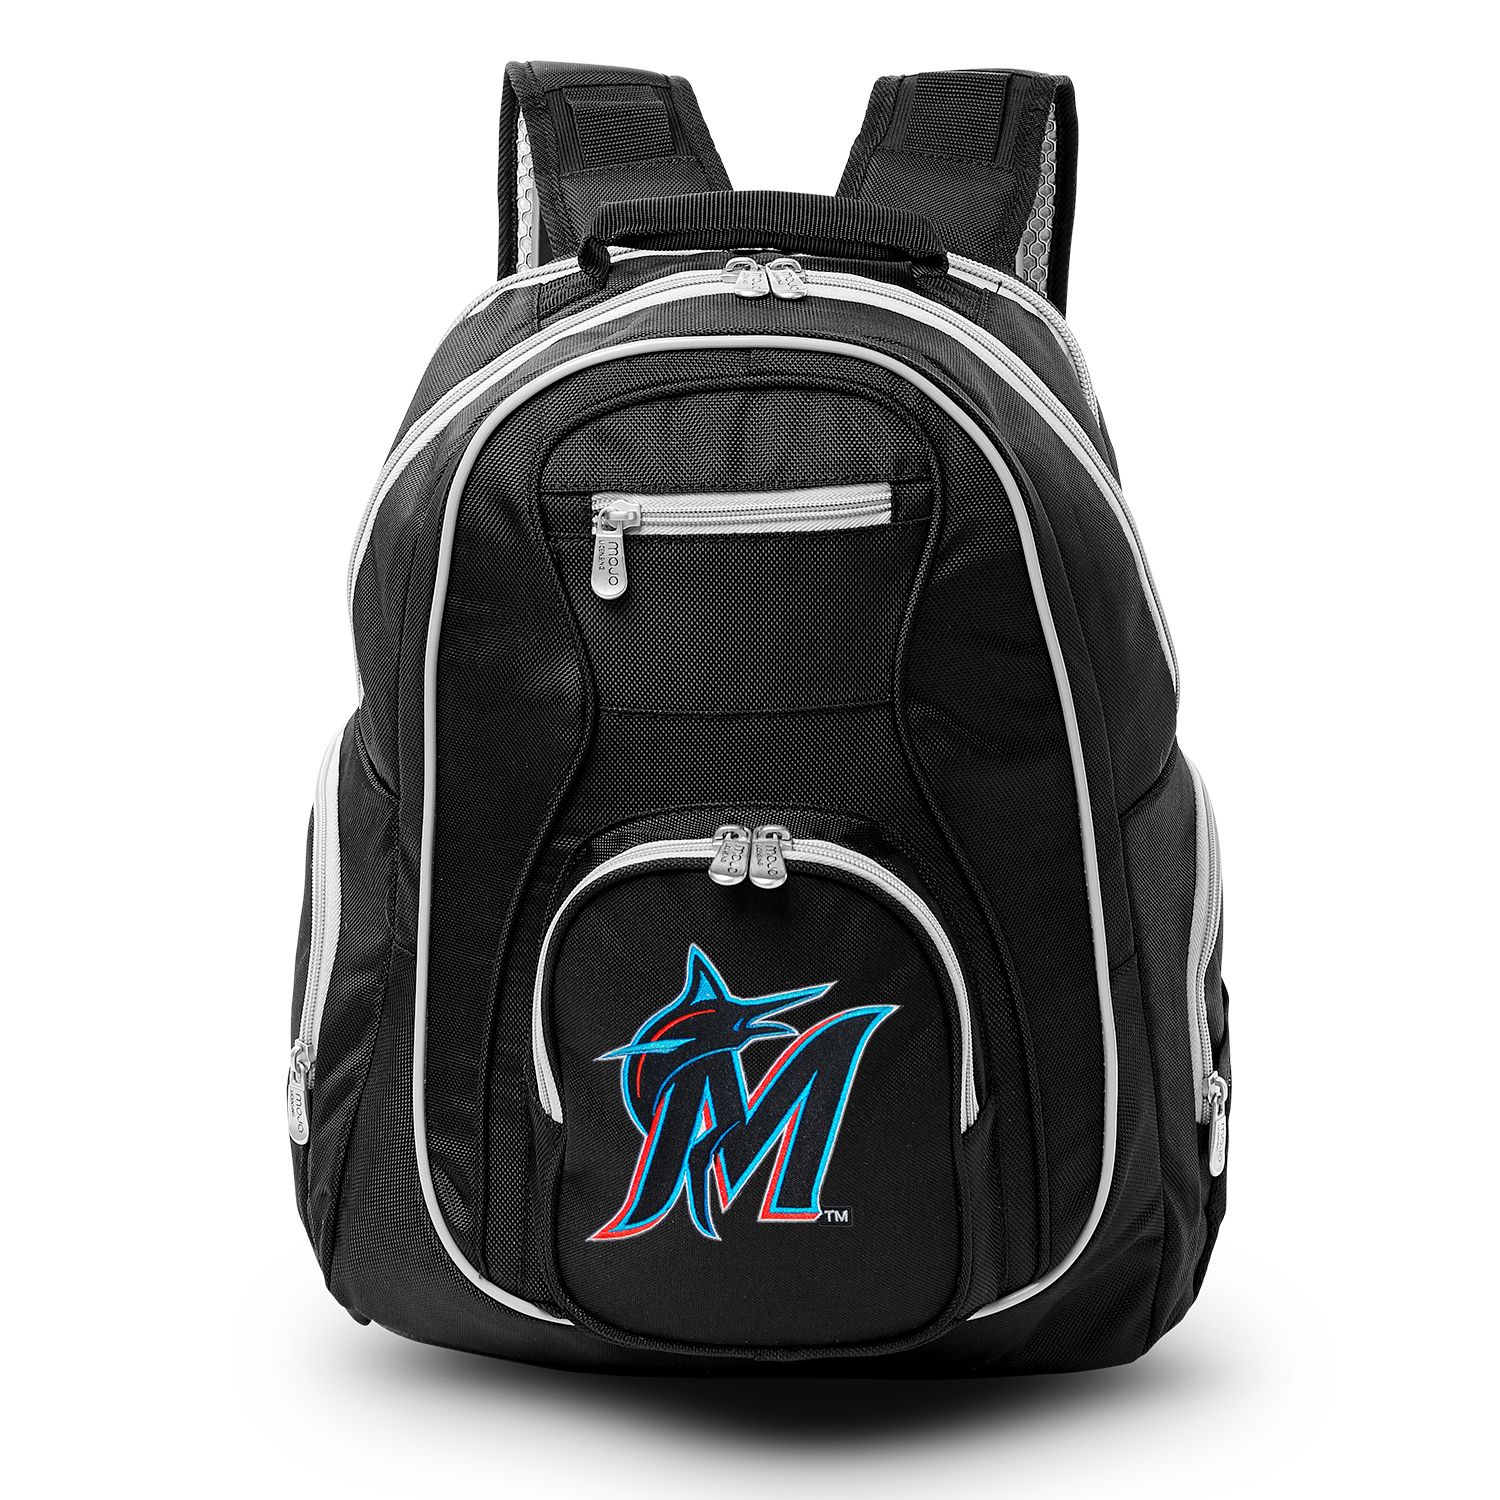 Рюкзак для ноутбука Miami Marlins рюкзак для ноутбука премиум класса miami marlins